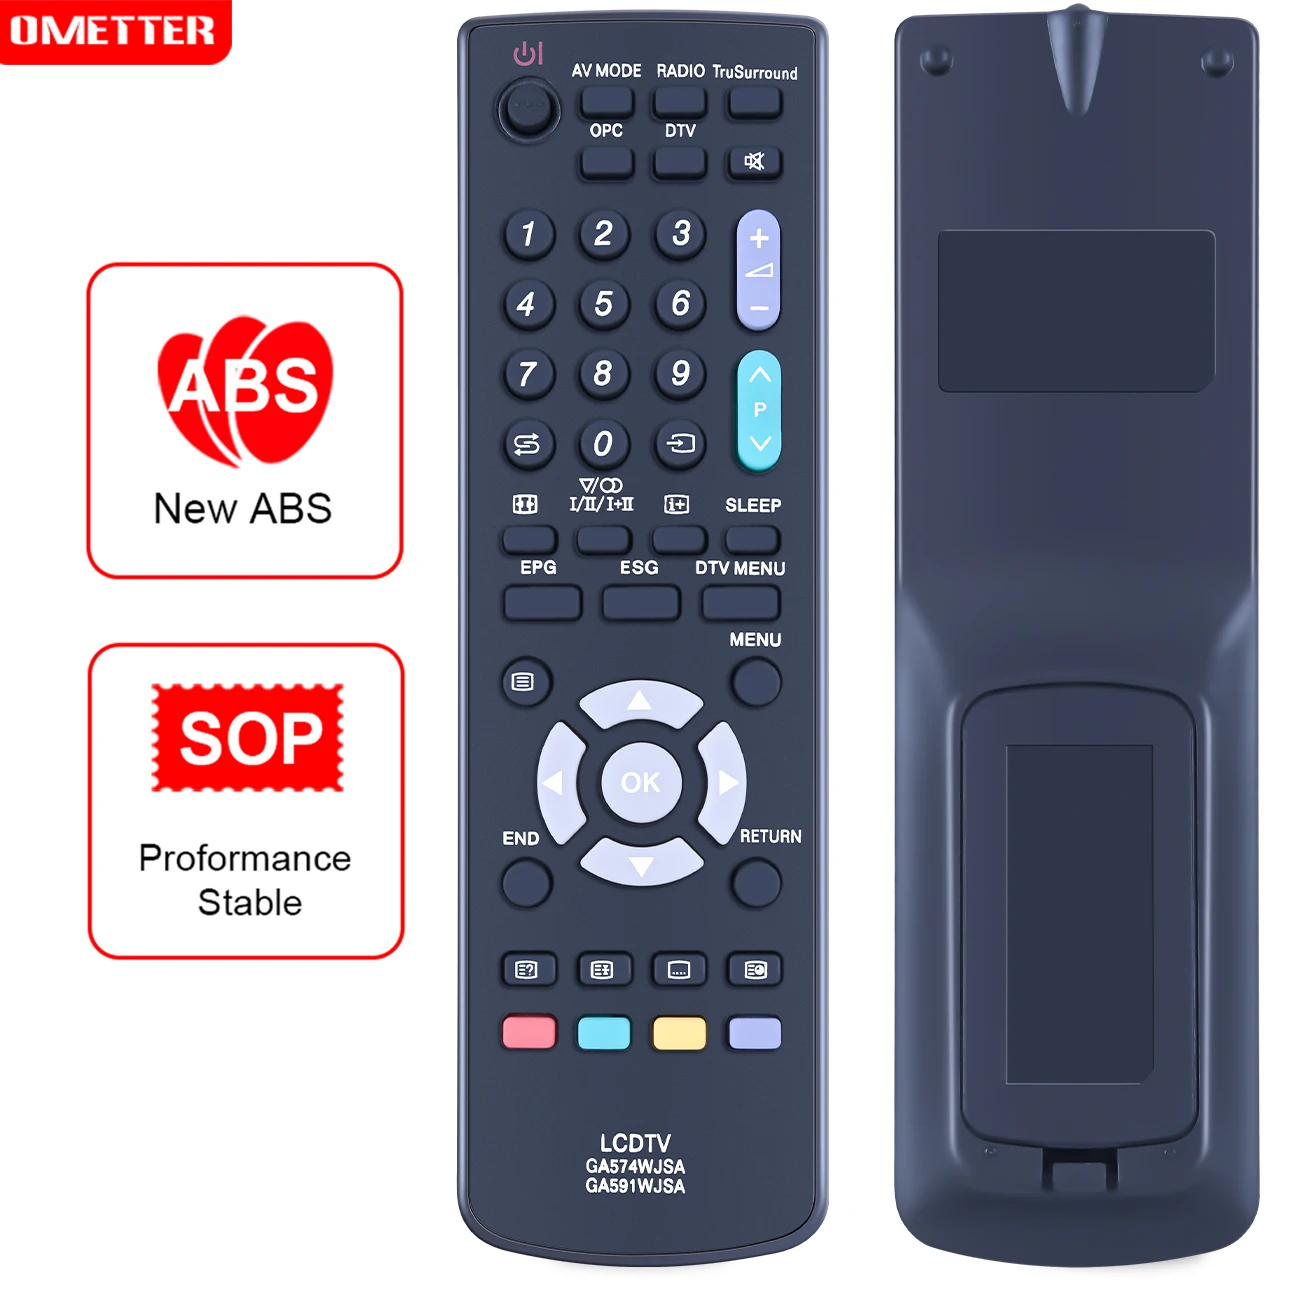 GB039WJSA-mando a distancia Original para TV SHARP AQUOS, LCD, LED,  LC-46LE840X, LC-52LE840X, LC-60LE640X, Fernbedienung, nuevo